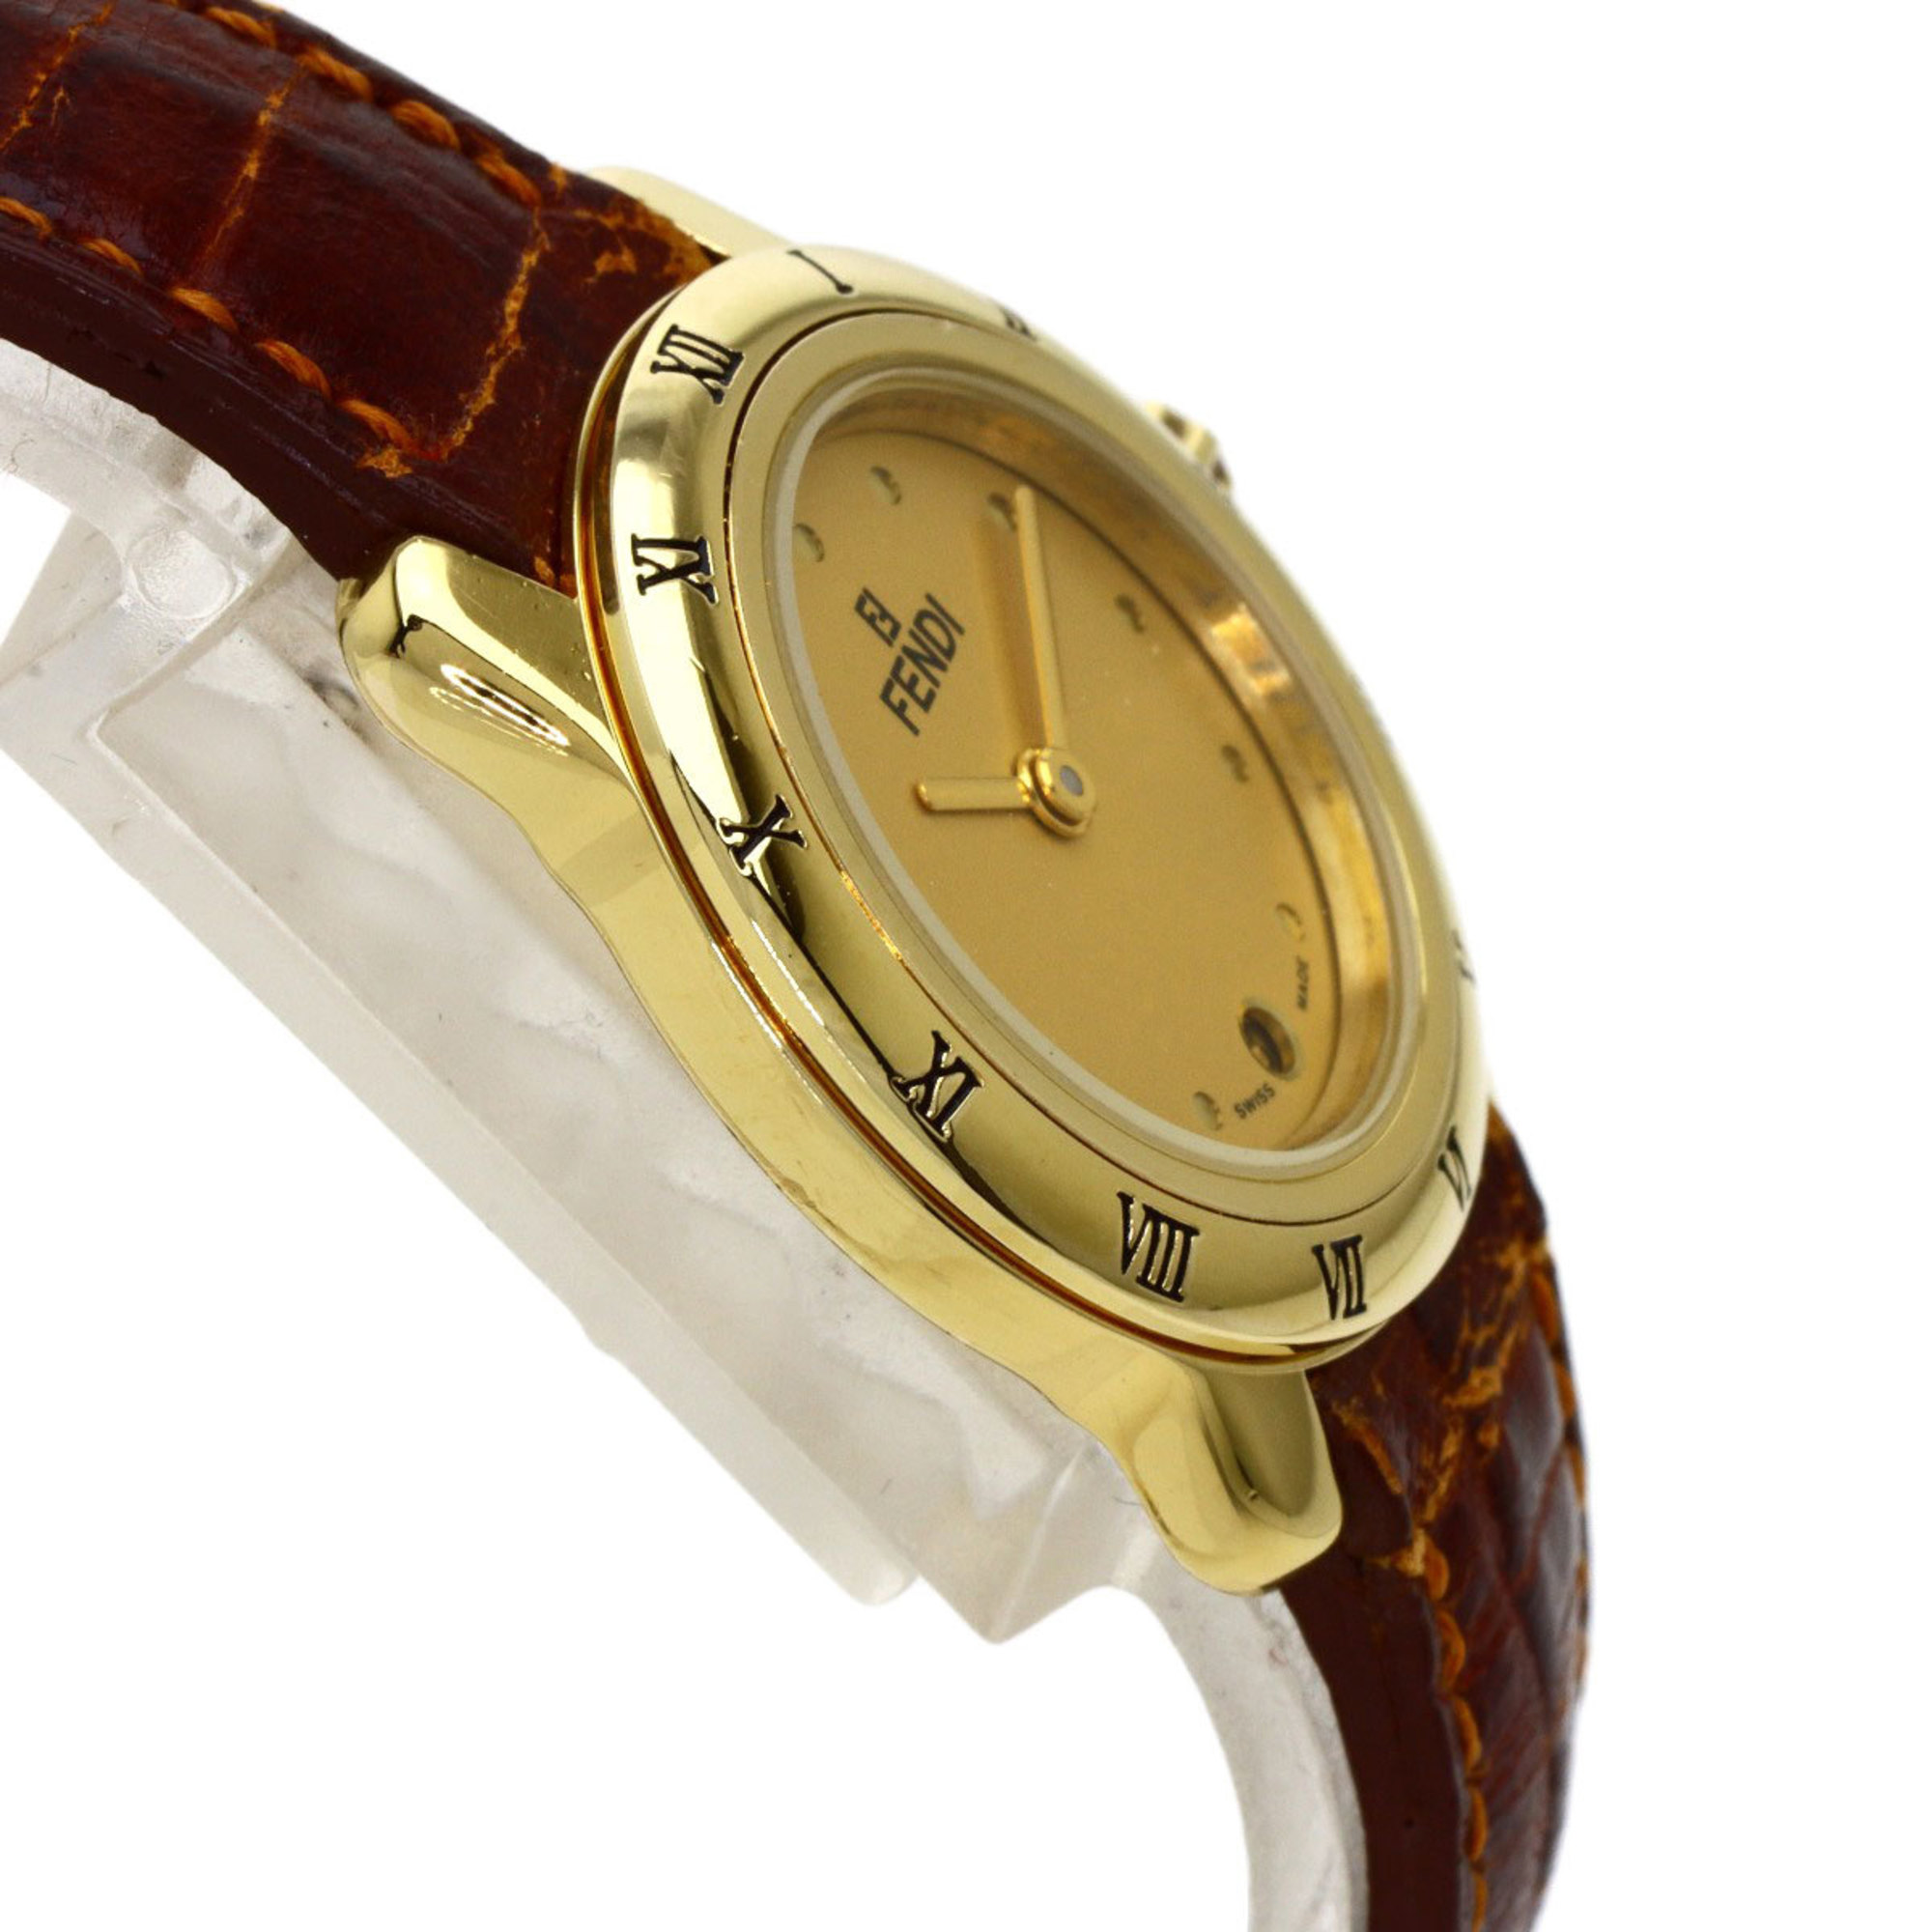 Fendi 860L watch with replacement bezel GP leather ladies FENDI